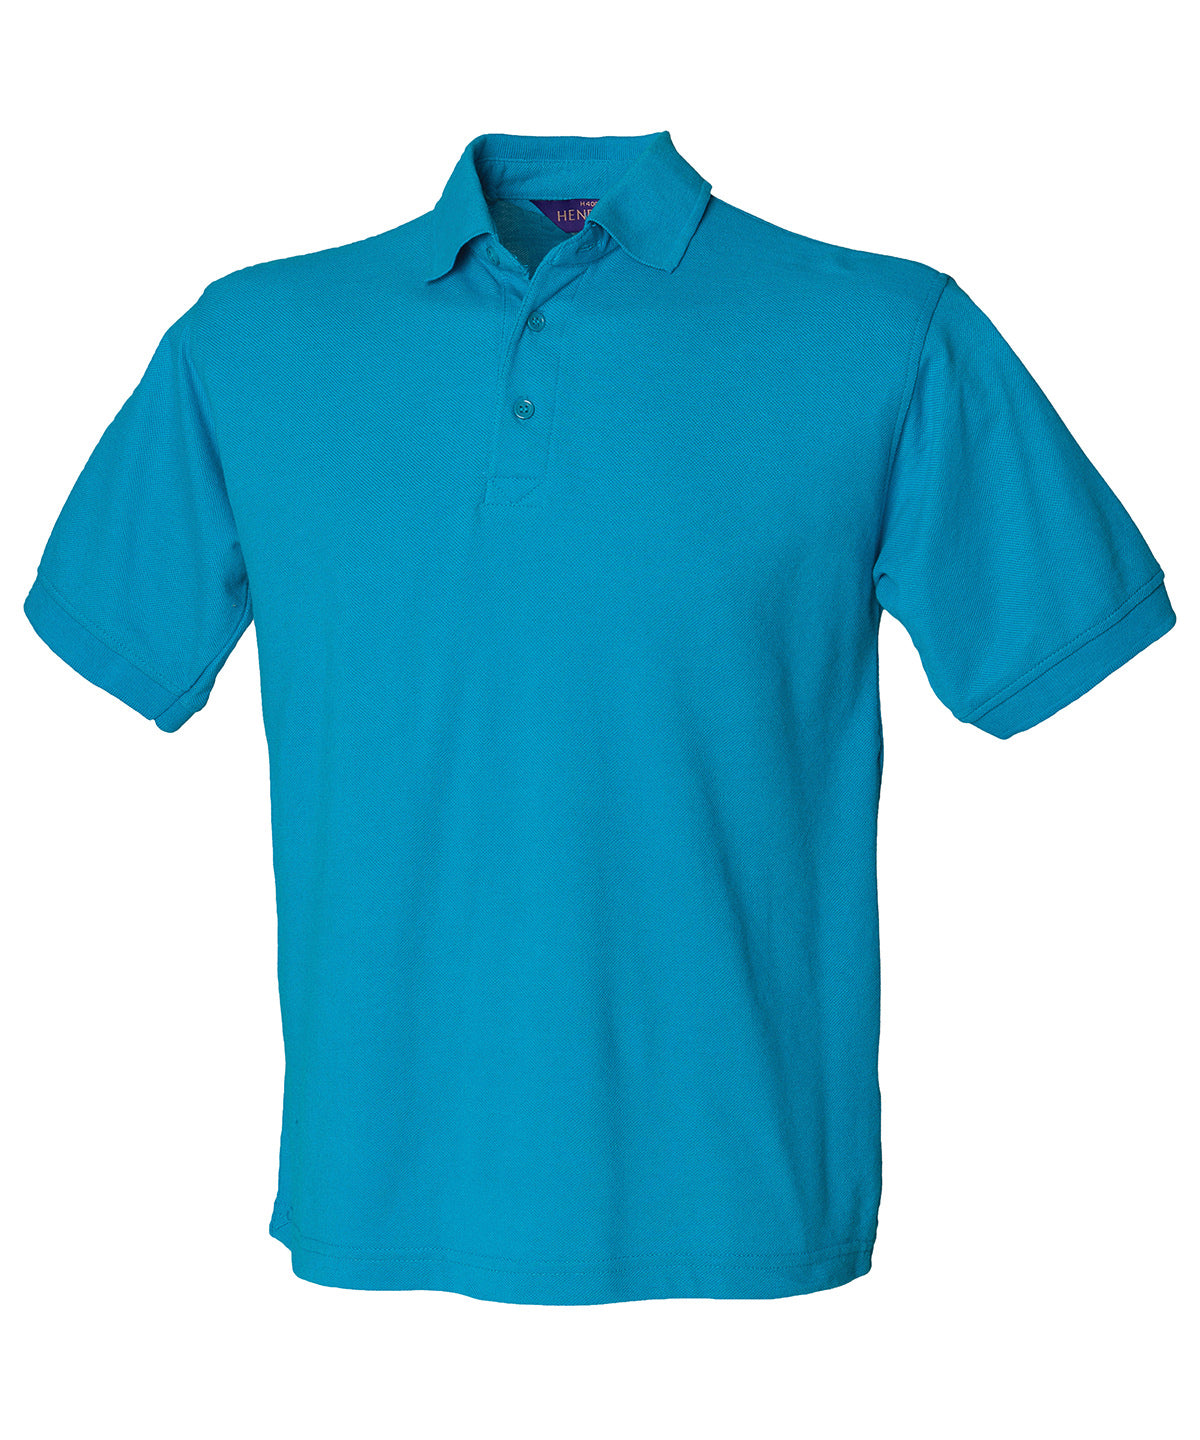 Personalised Polo Shirts - Bottle Henbury 65/35 Classic piqué polo shirt